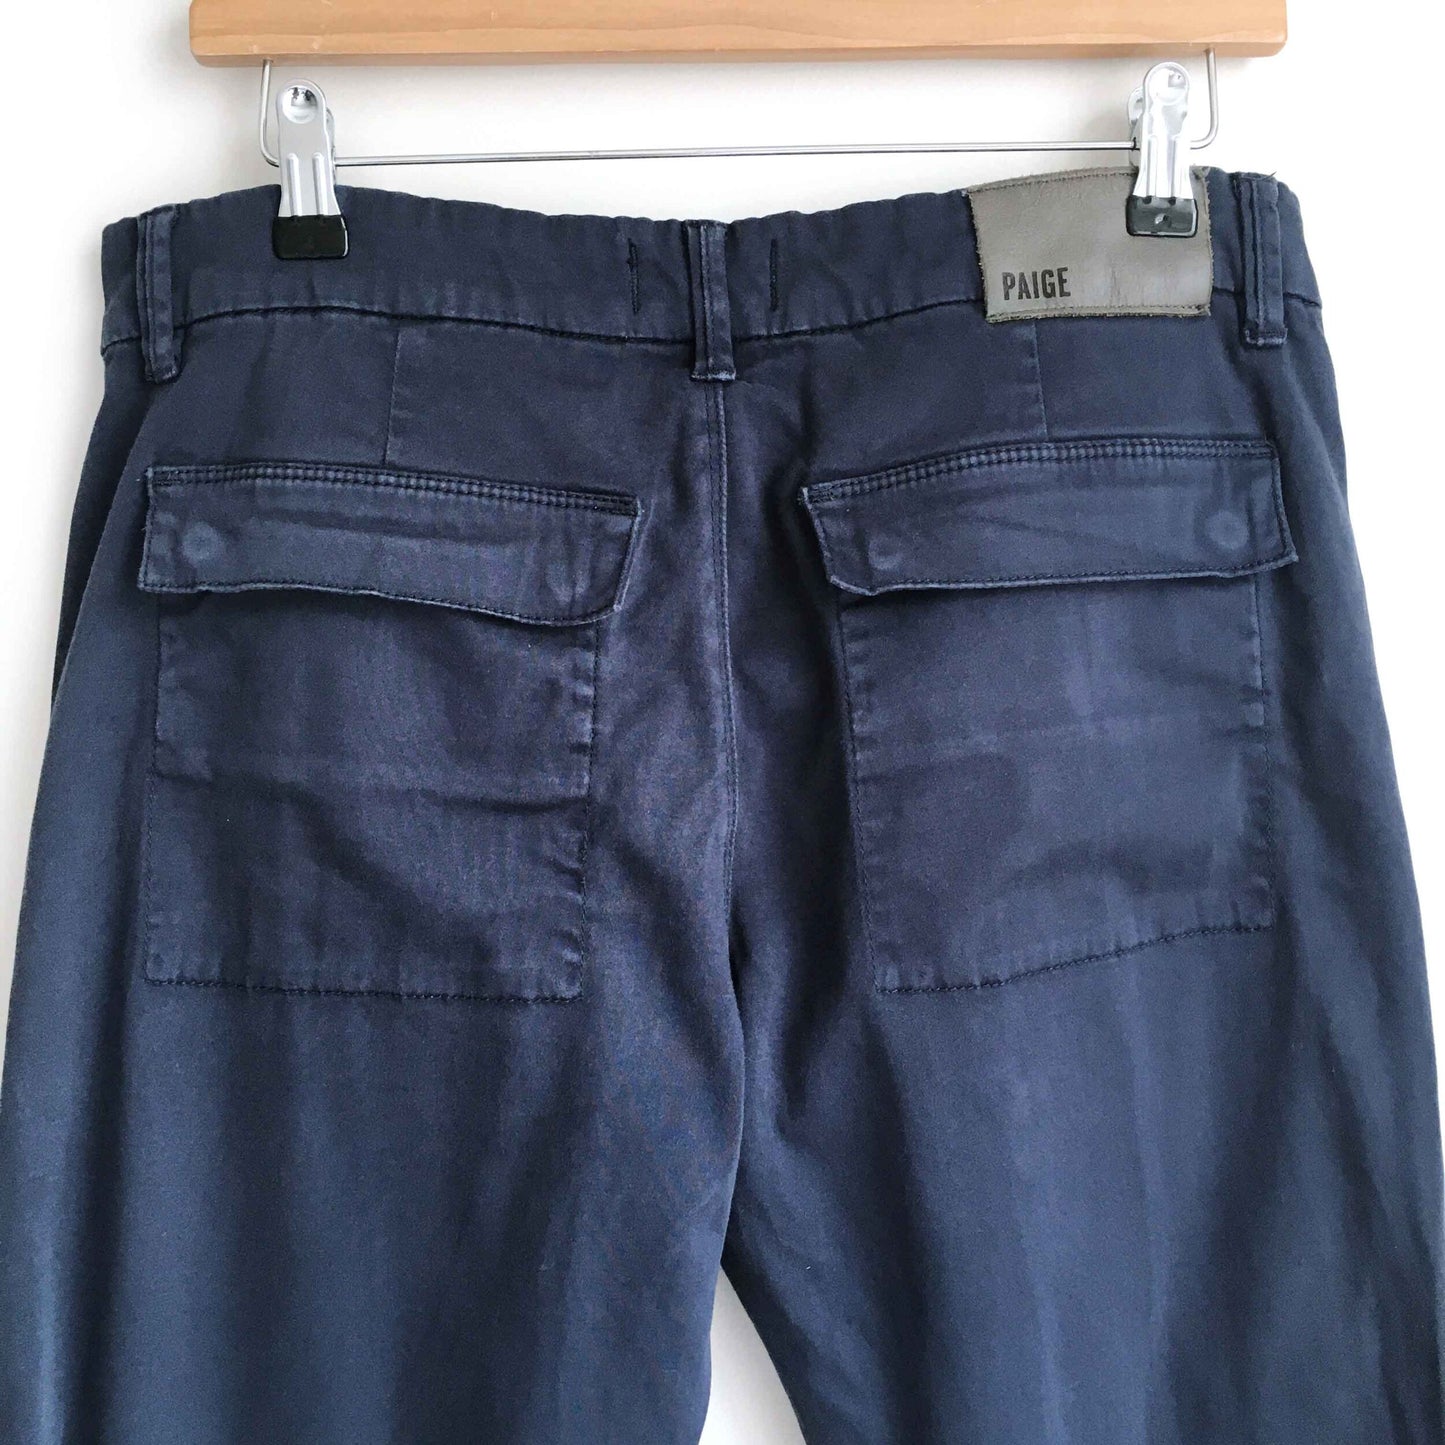 PAIGE cargo skinny zip pants - size 31